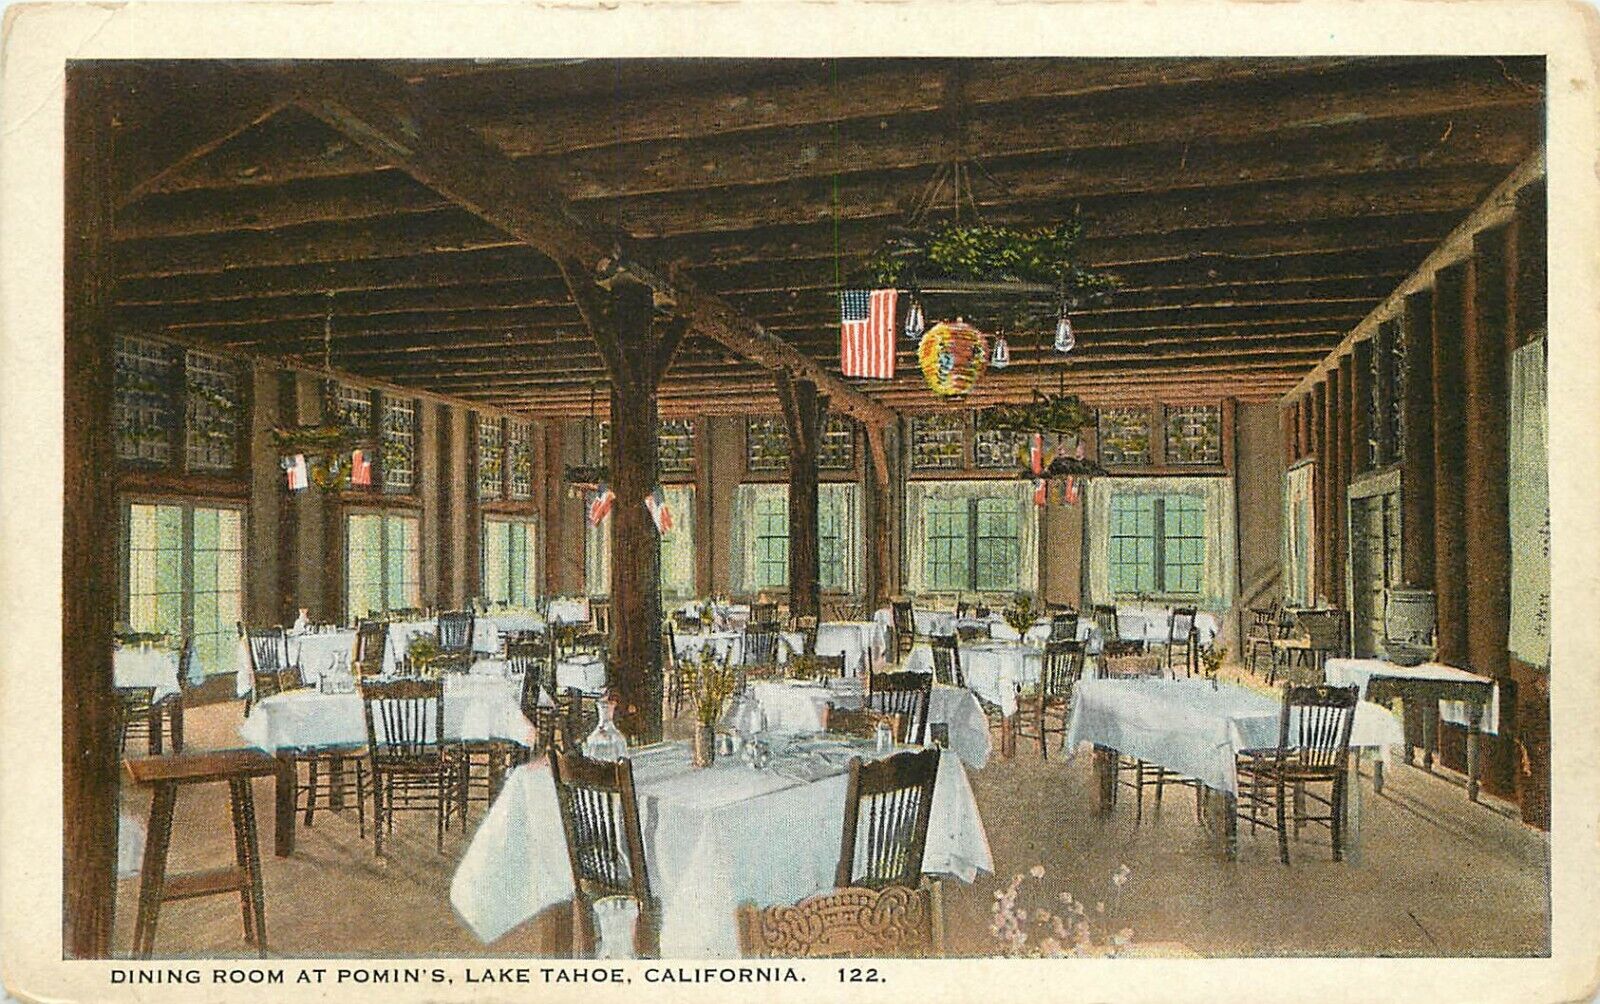 c1920sPostcard Interior Dining Room at Pomin's, Lake Tahoe CA, Ed. Hess 122.